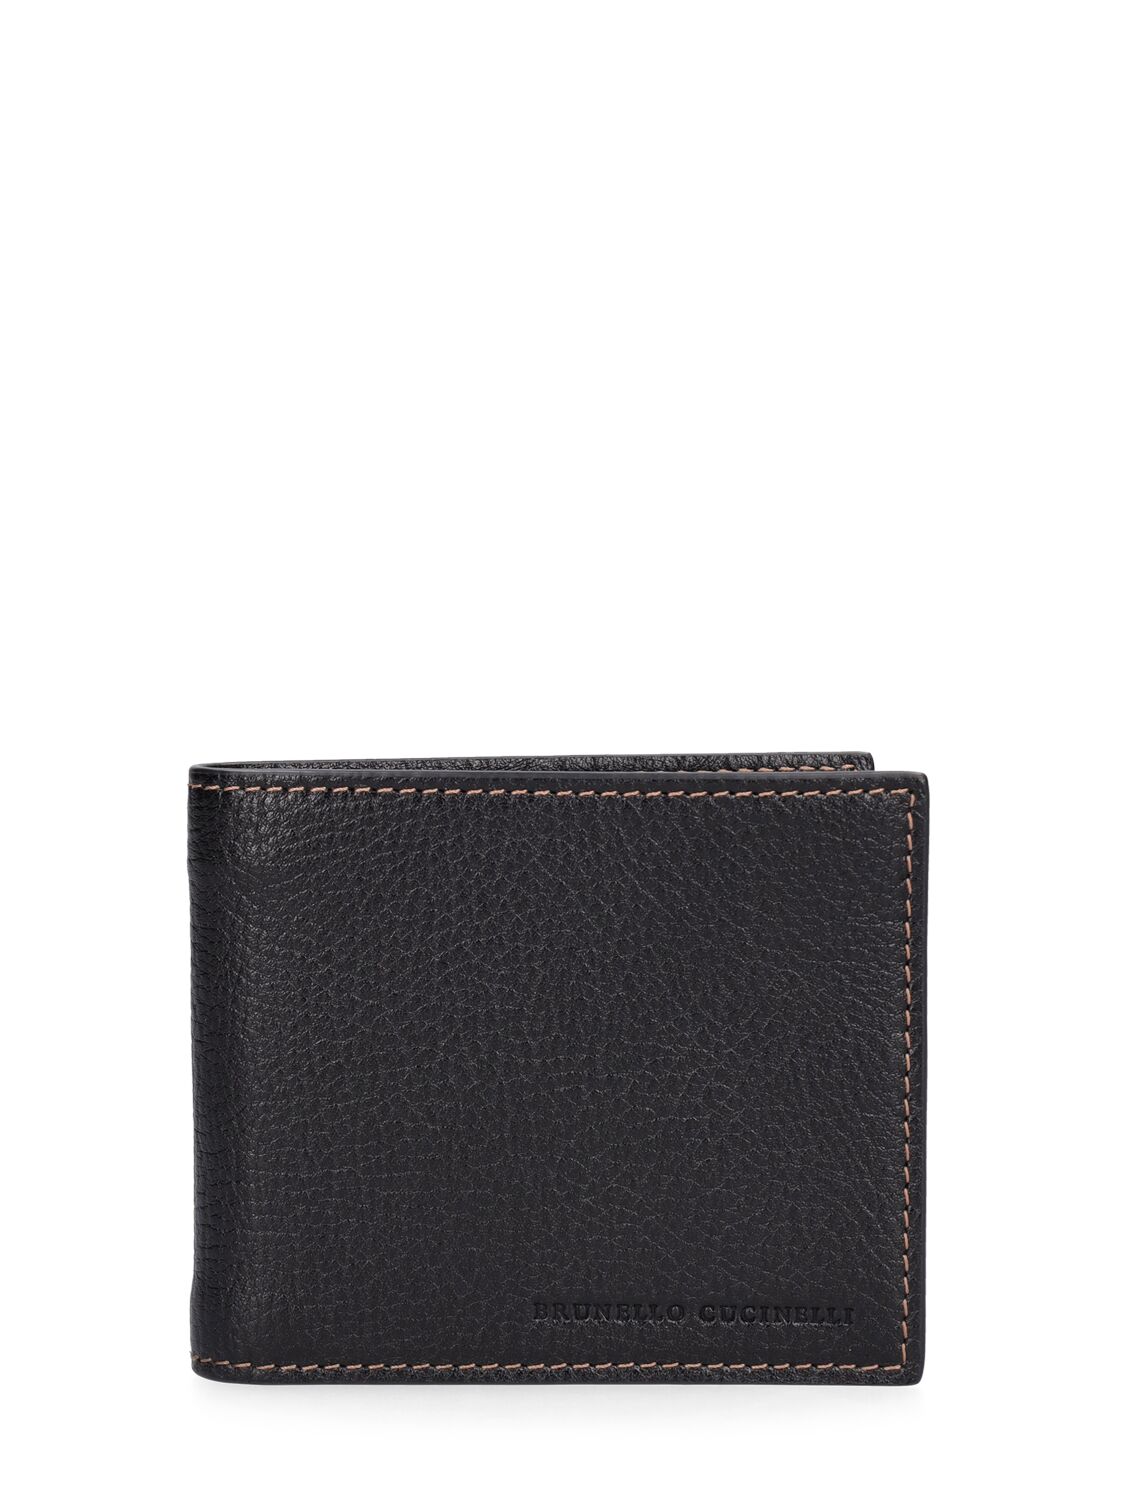 Brunello Cucinelli Leather Logo Wallet In Black